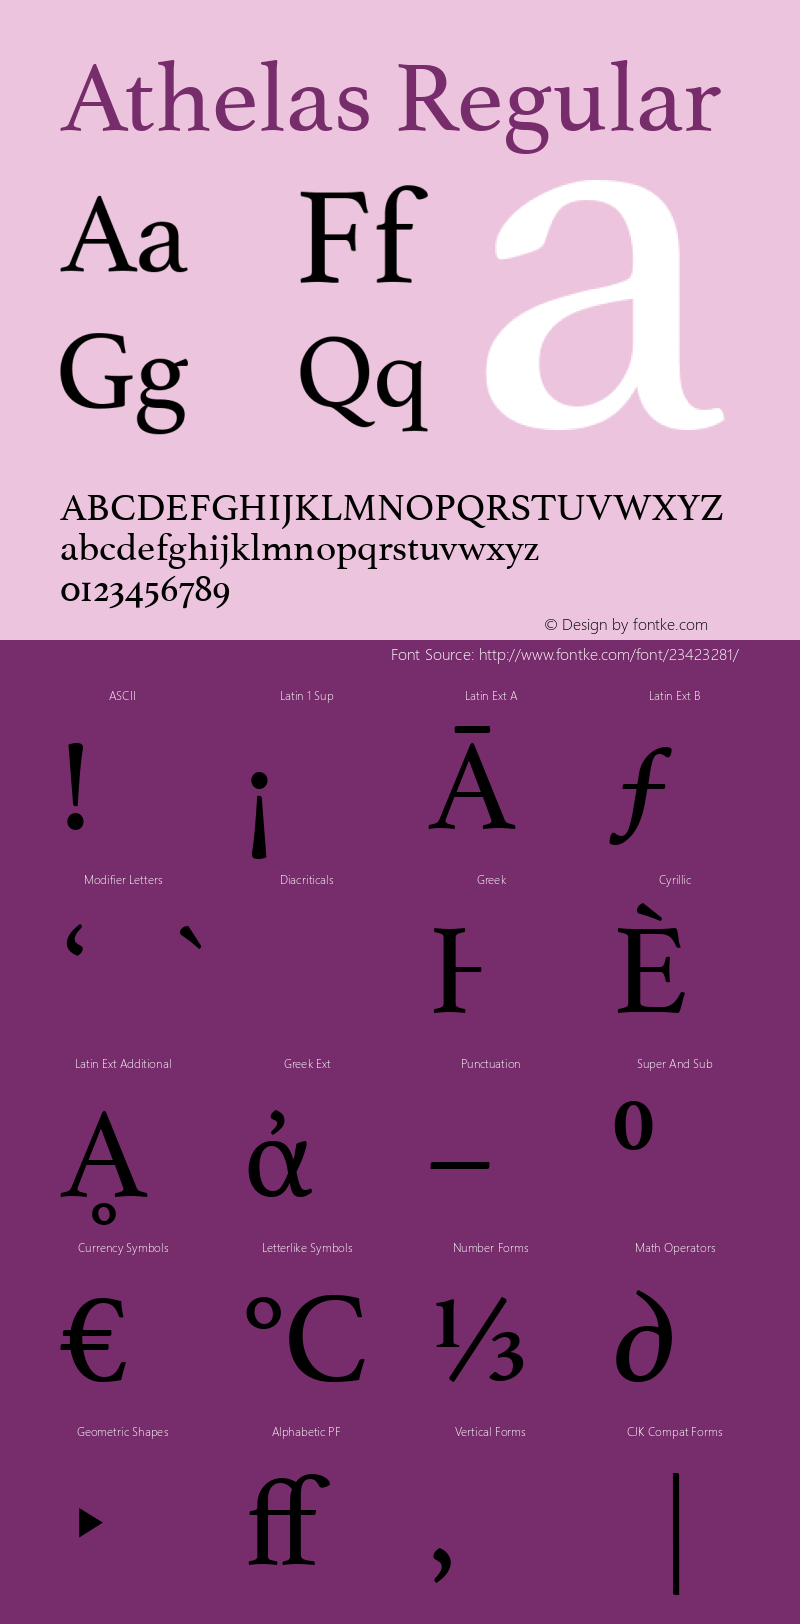 Athelas Italic 13.0d1e3 Font Sample